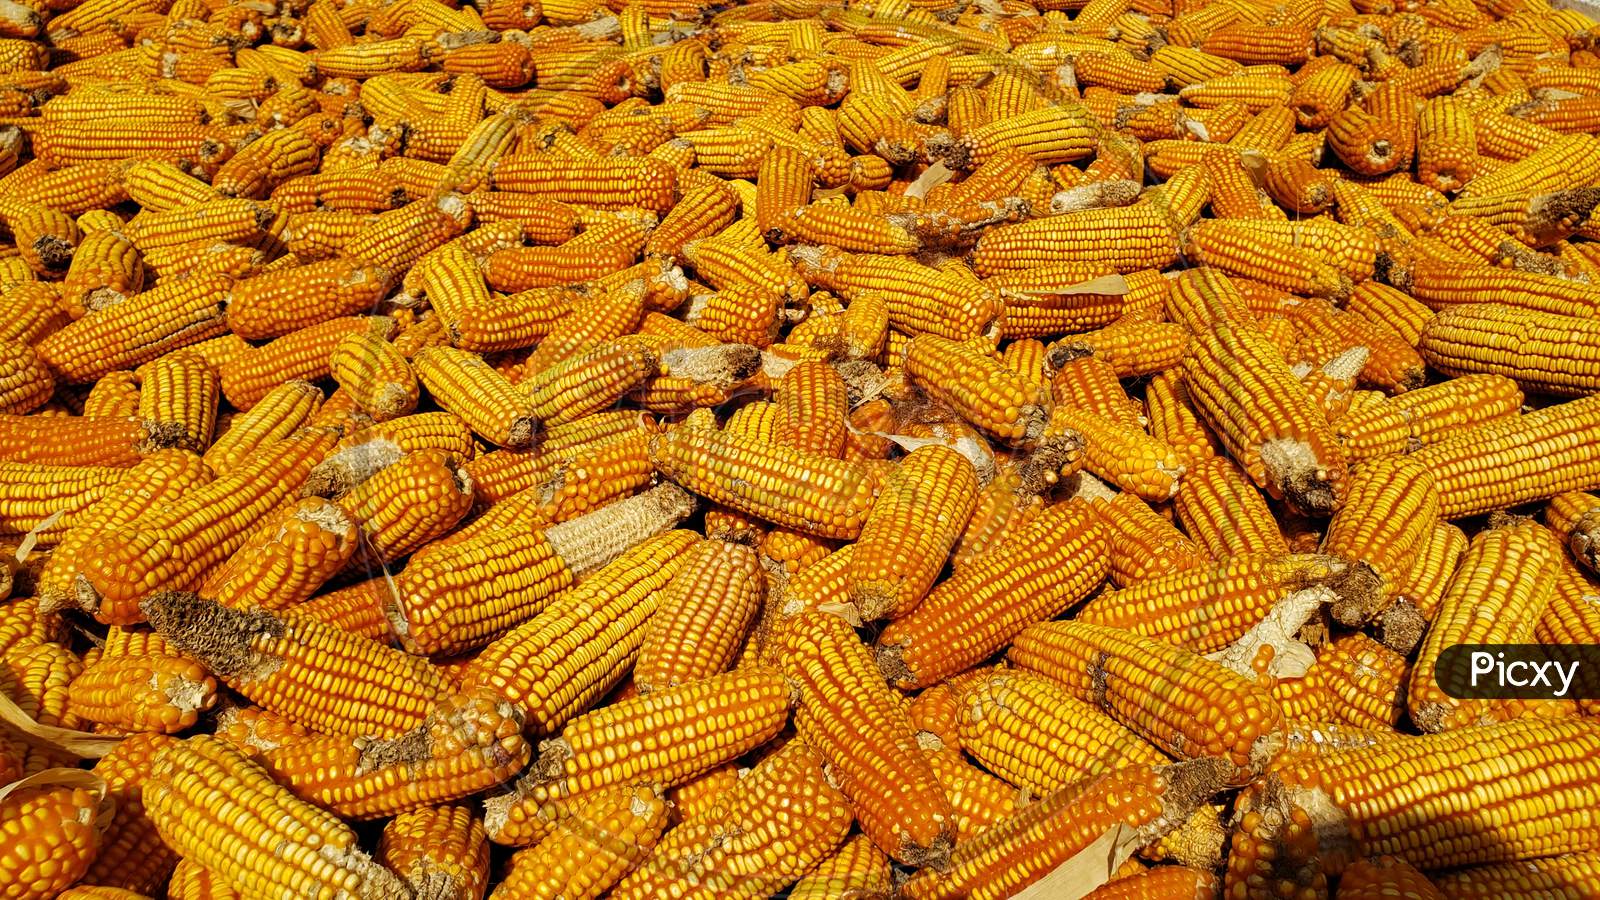 Corn in the market